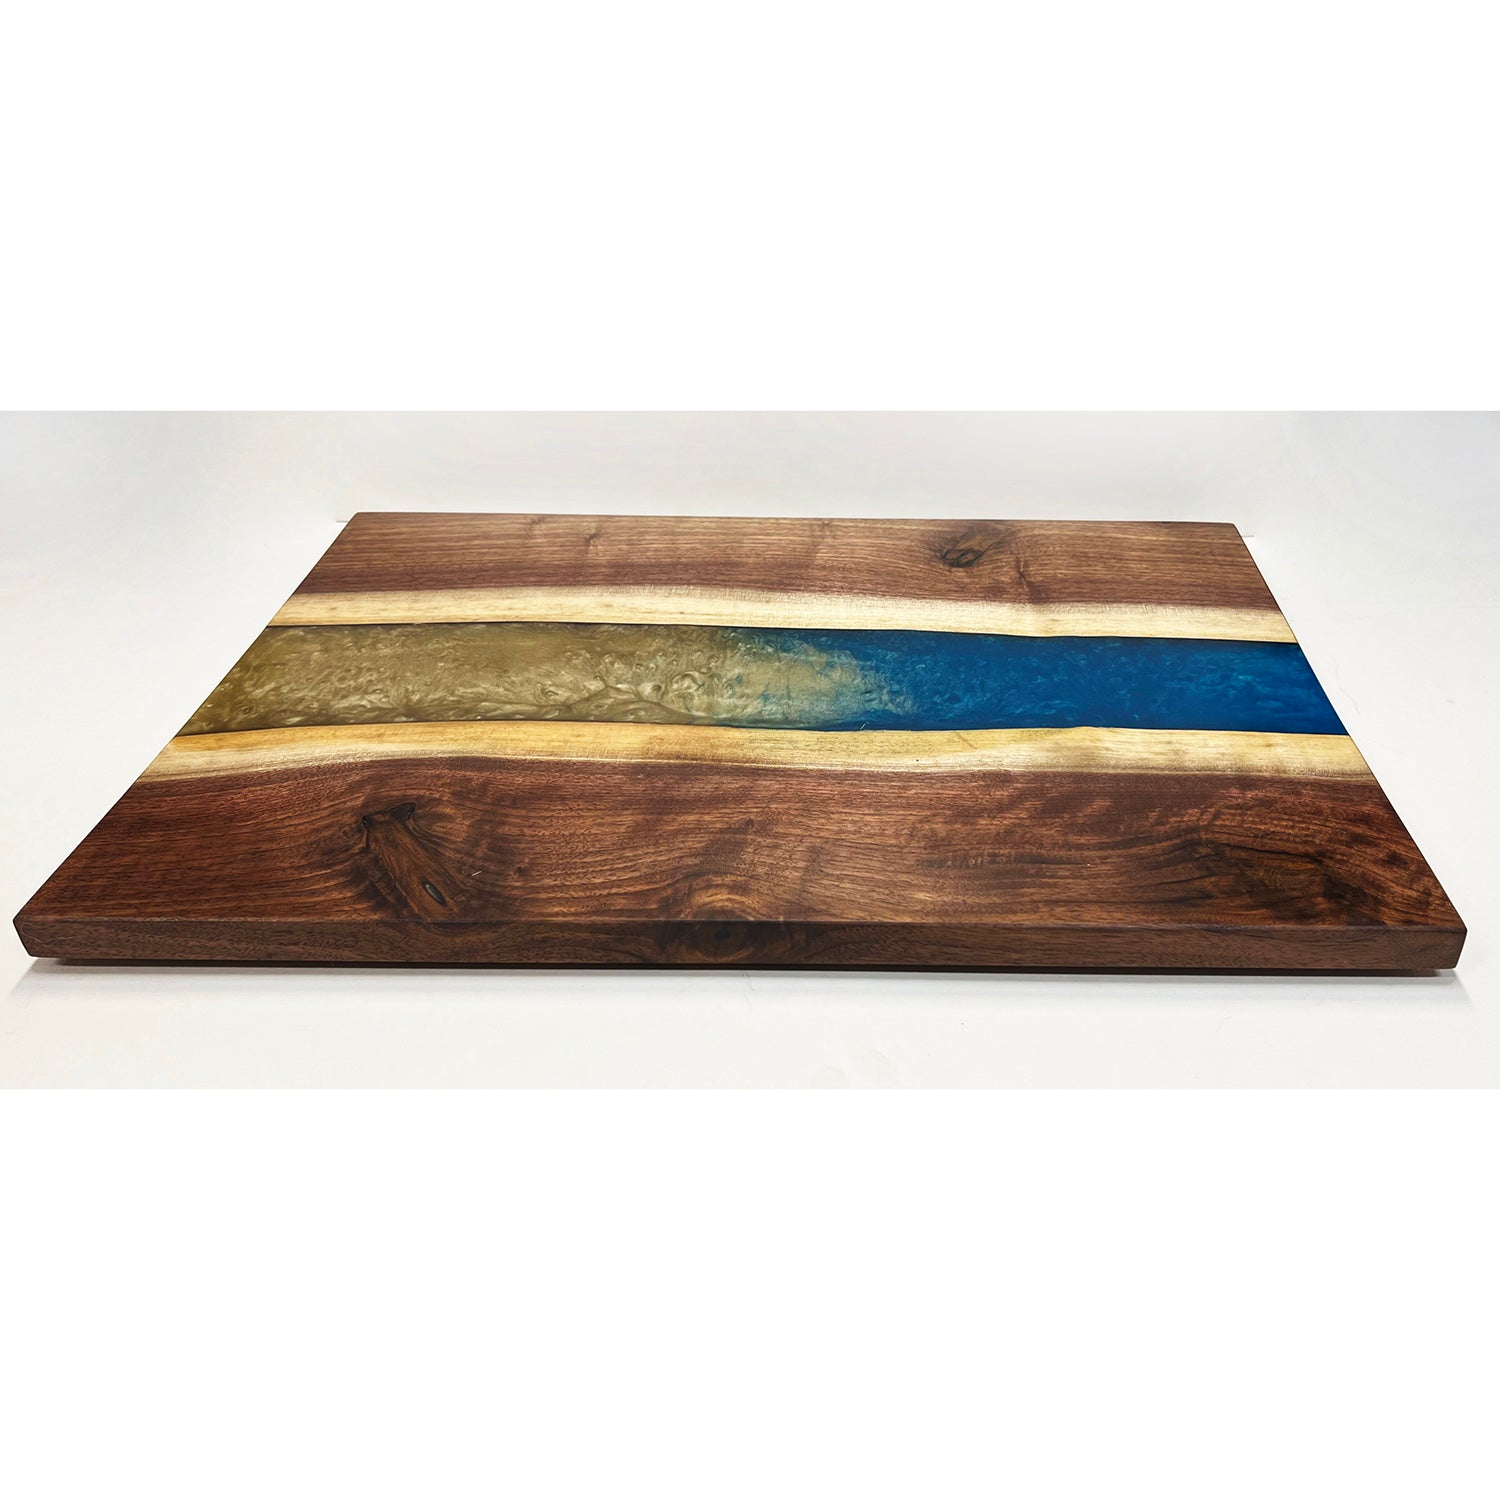 Ron Walmer - 2 tone board blue and gold